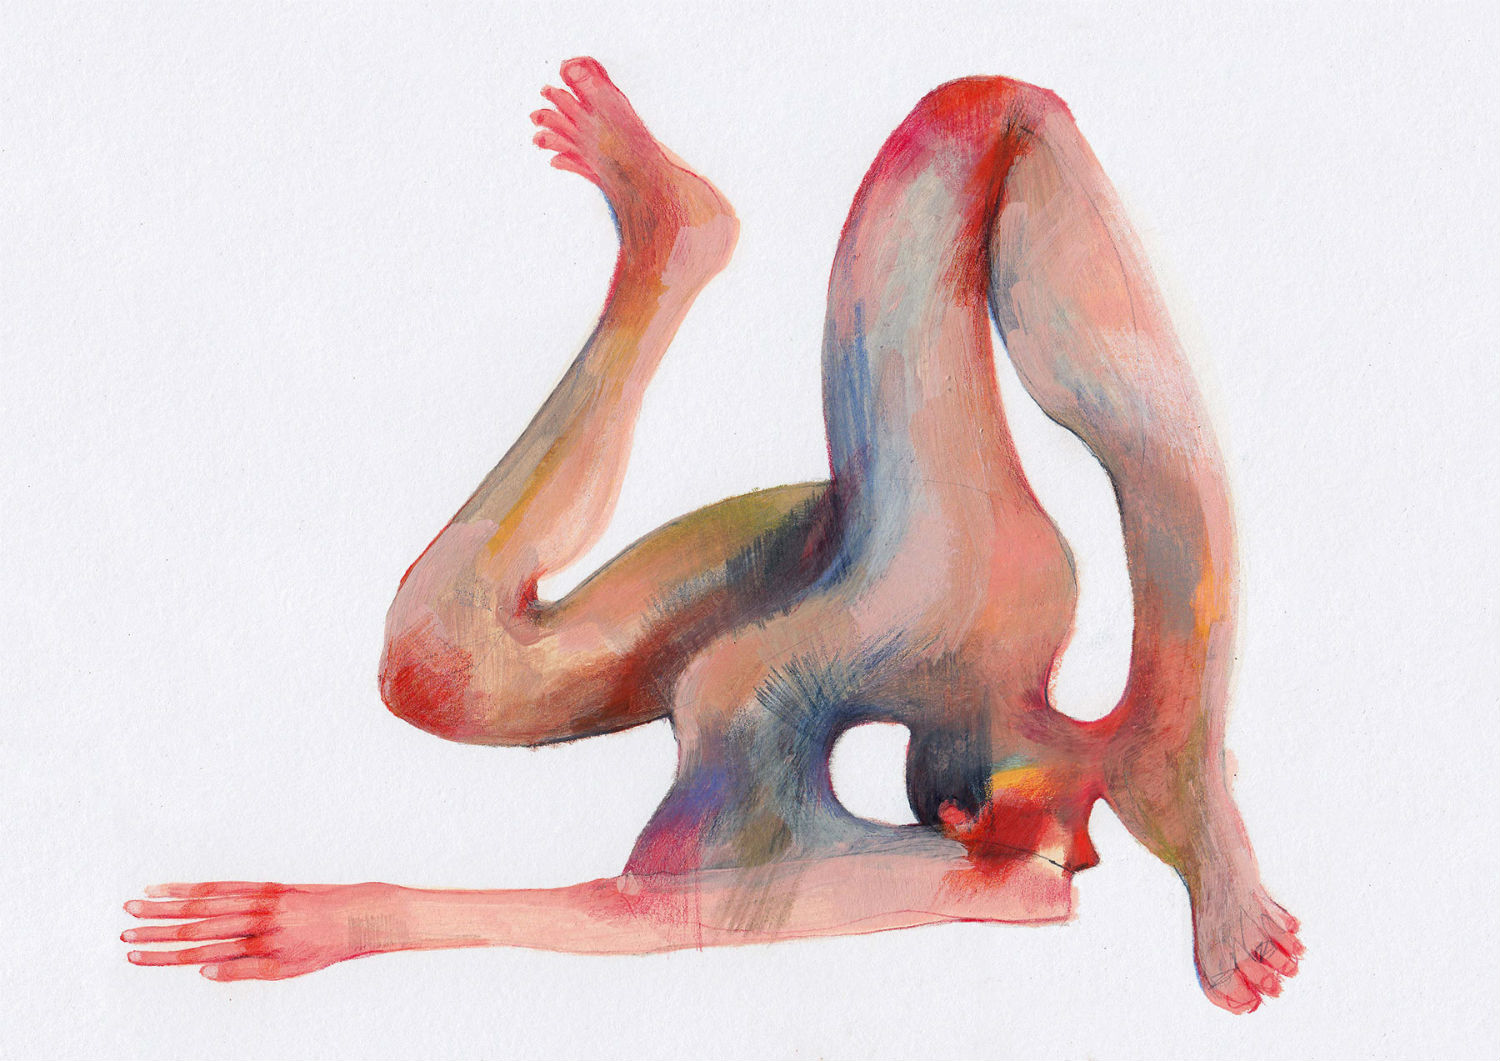 Marina González Eme nude painting body shape abstract